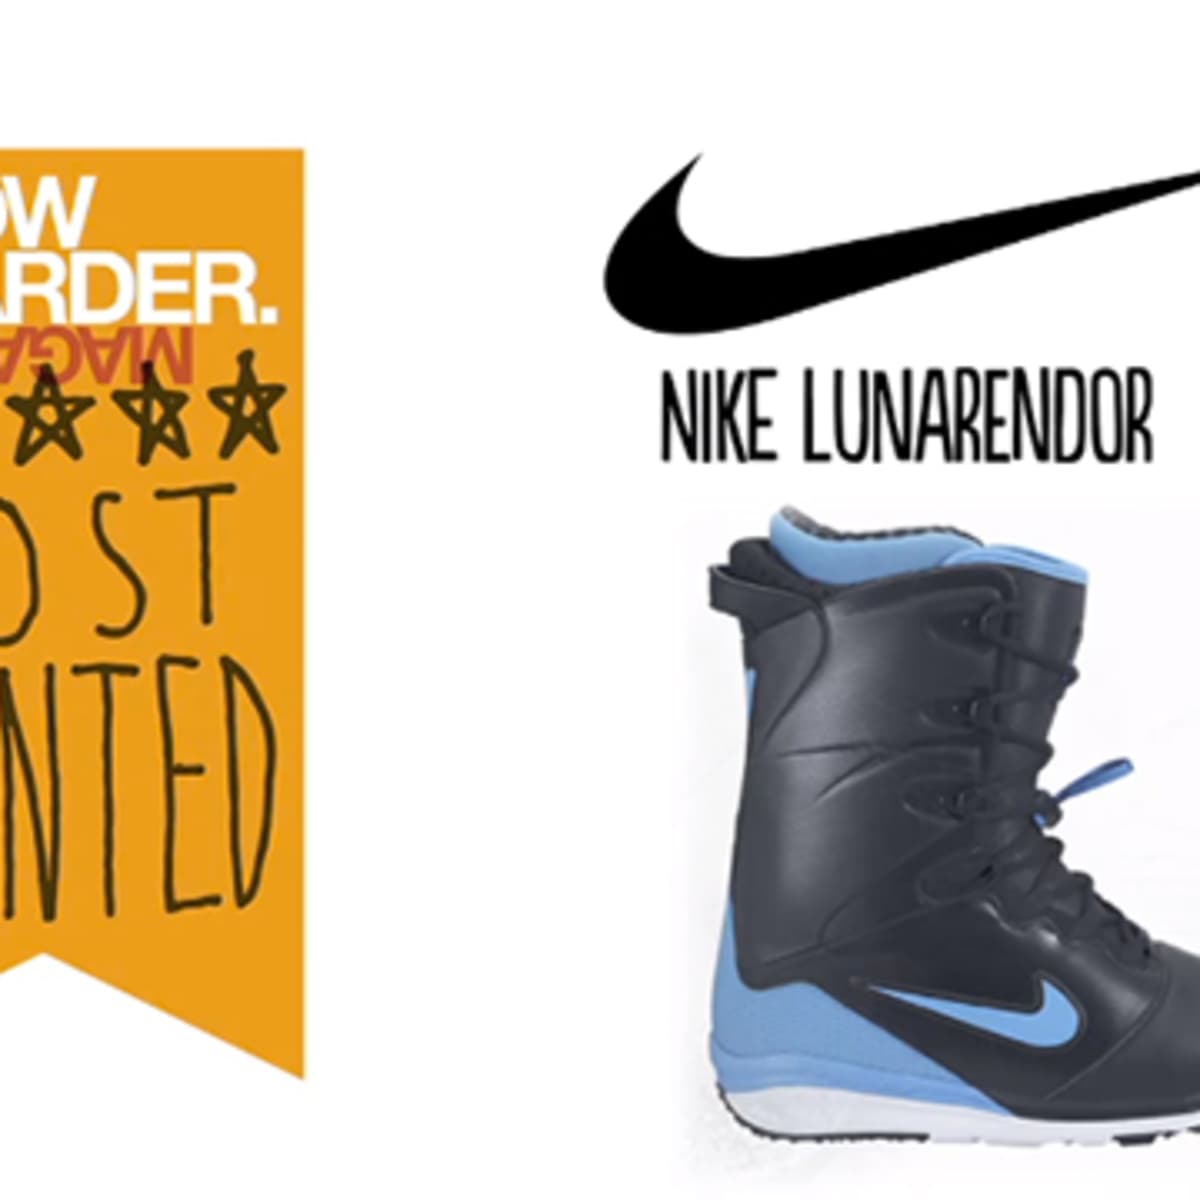 2014 Snowboard Gear: Nike Lunarendor - Video - Snowboarder